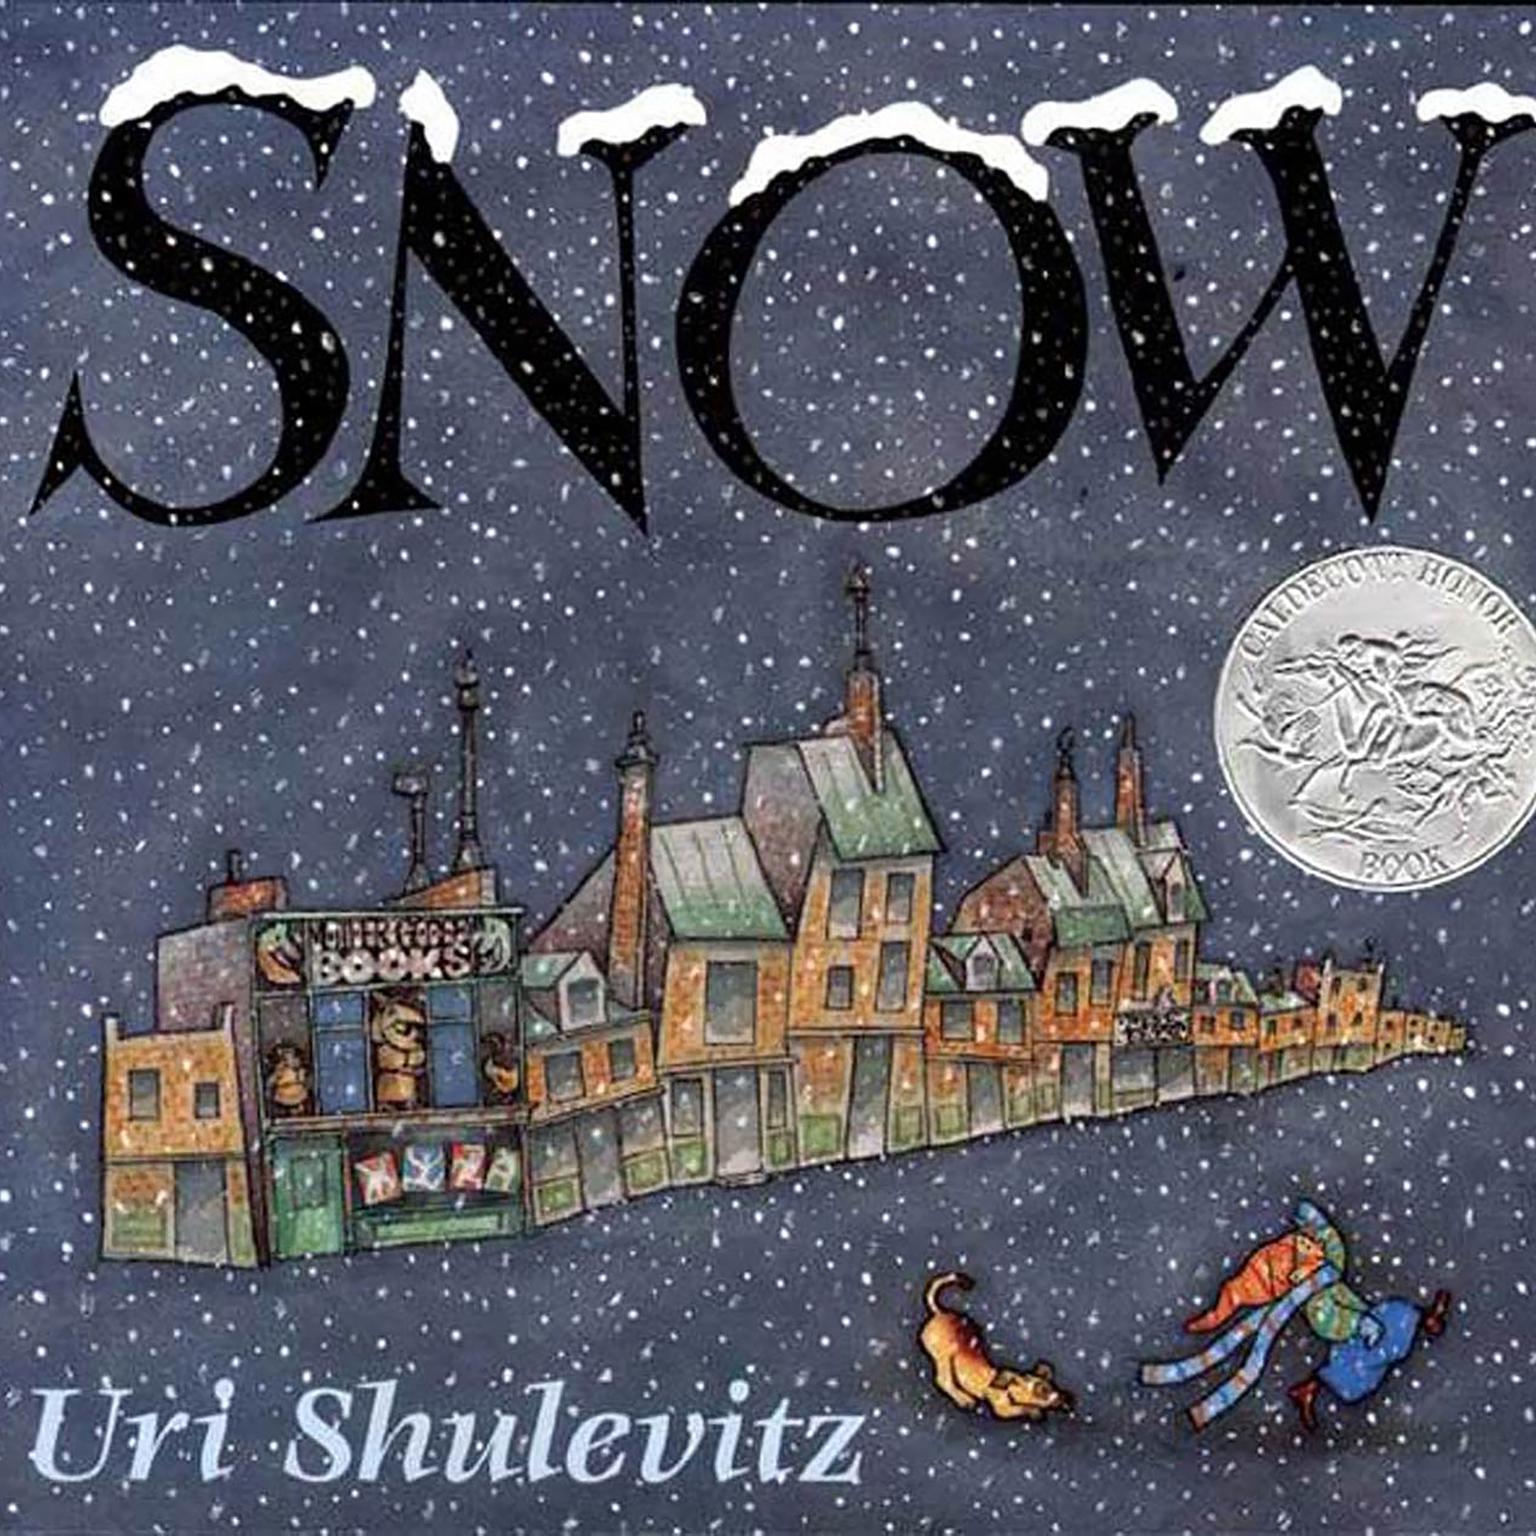 Snow: (Caldecott Honor Book) Audiobook, by Uri Shulevitz